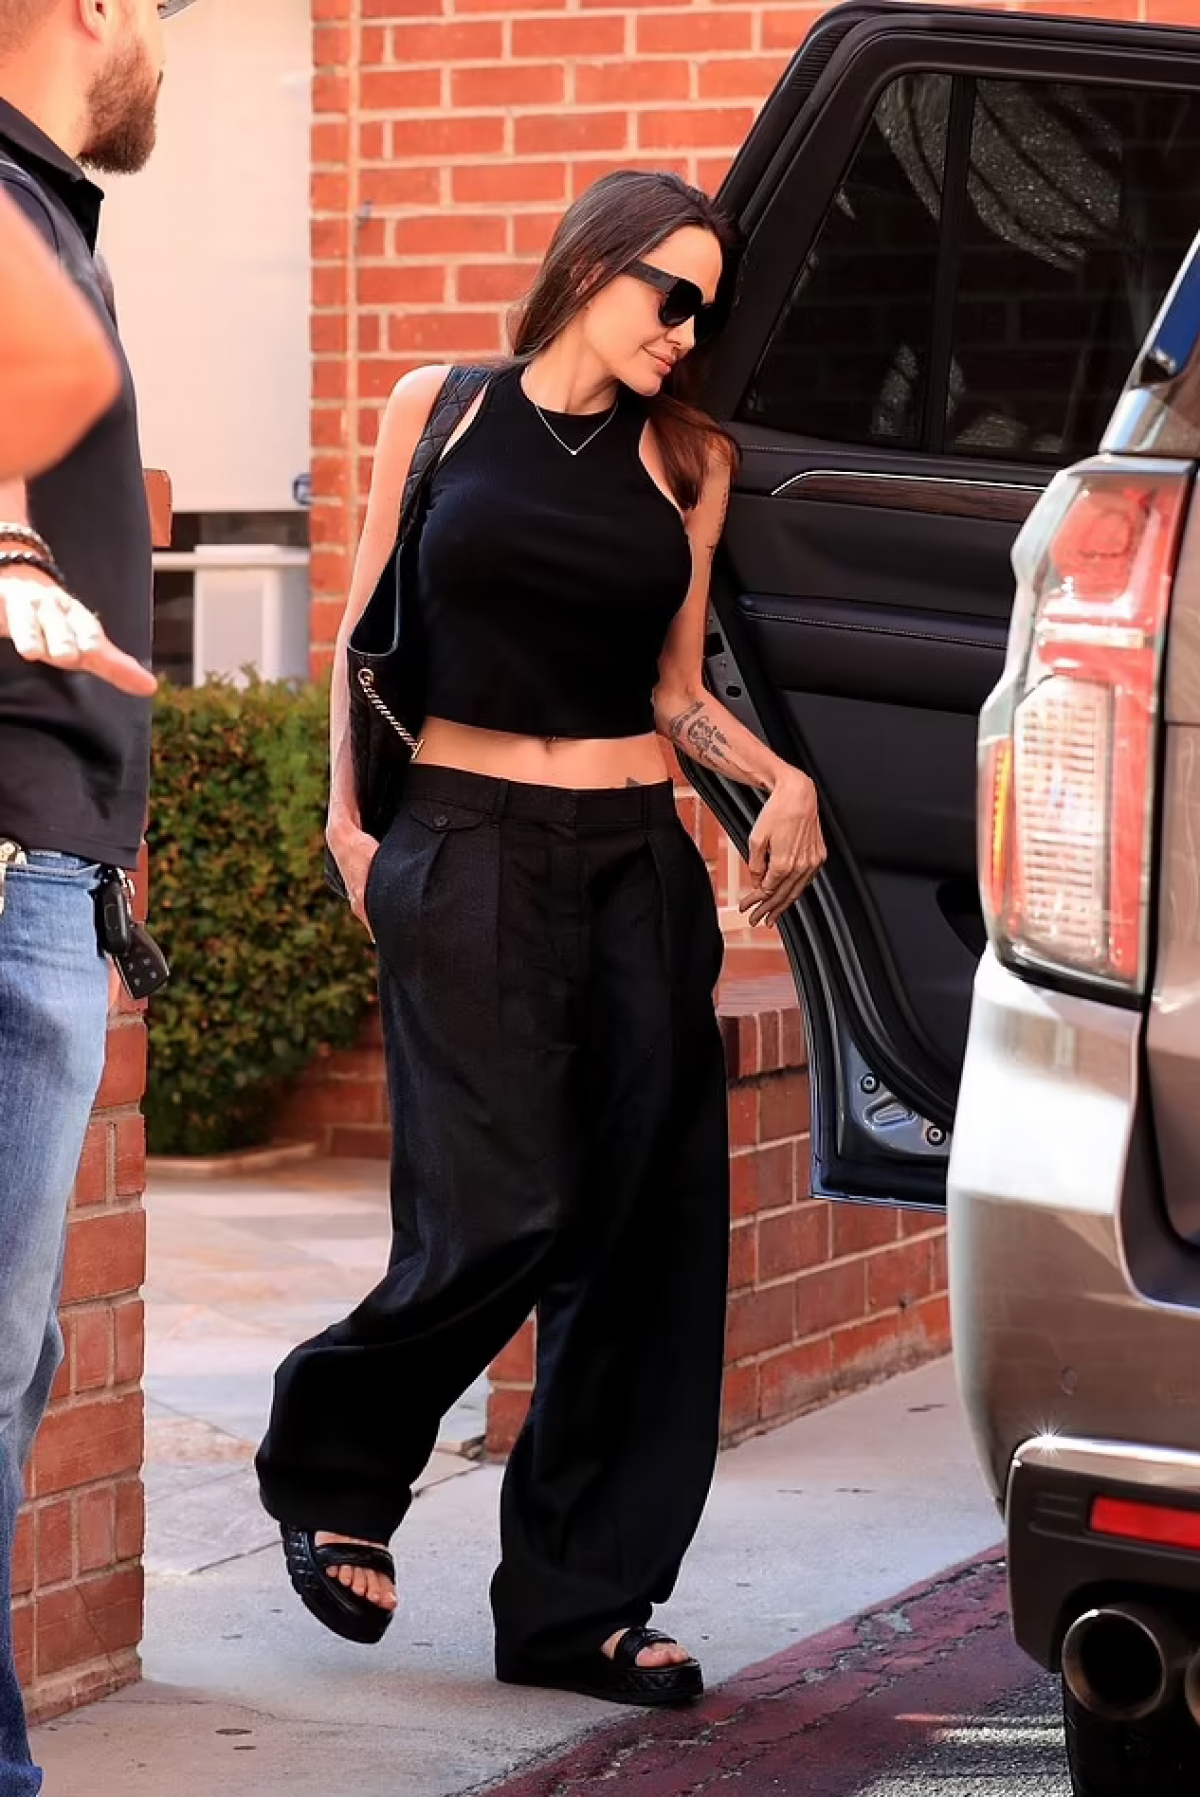 Angelina Jolie wears a crop top showing off her slim waist on the street - Photo 2.